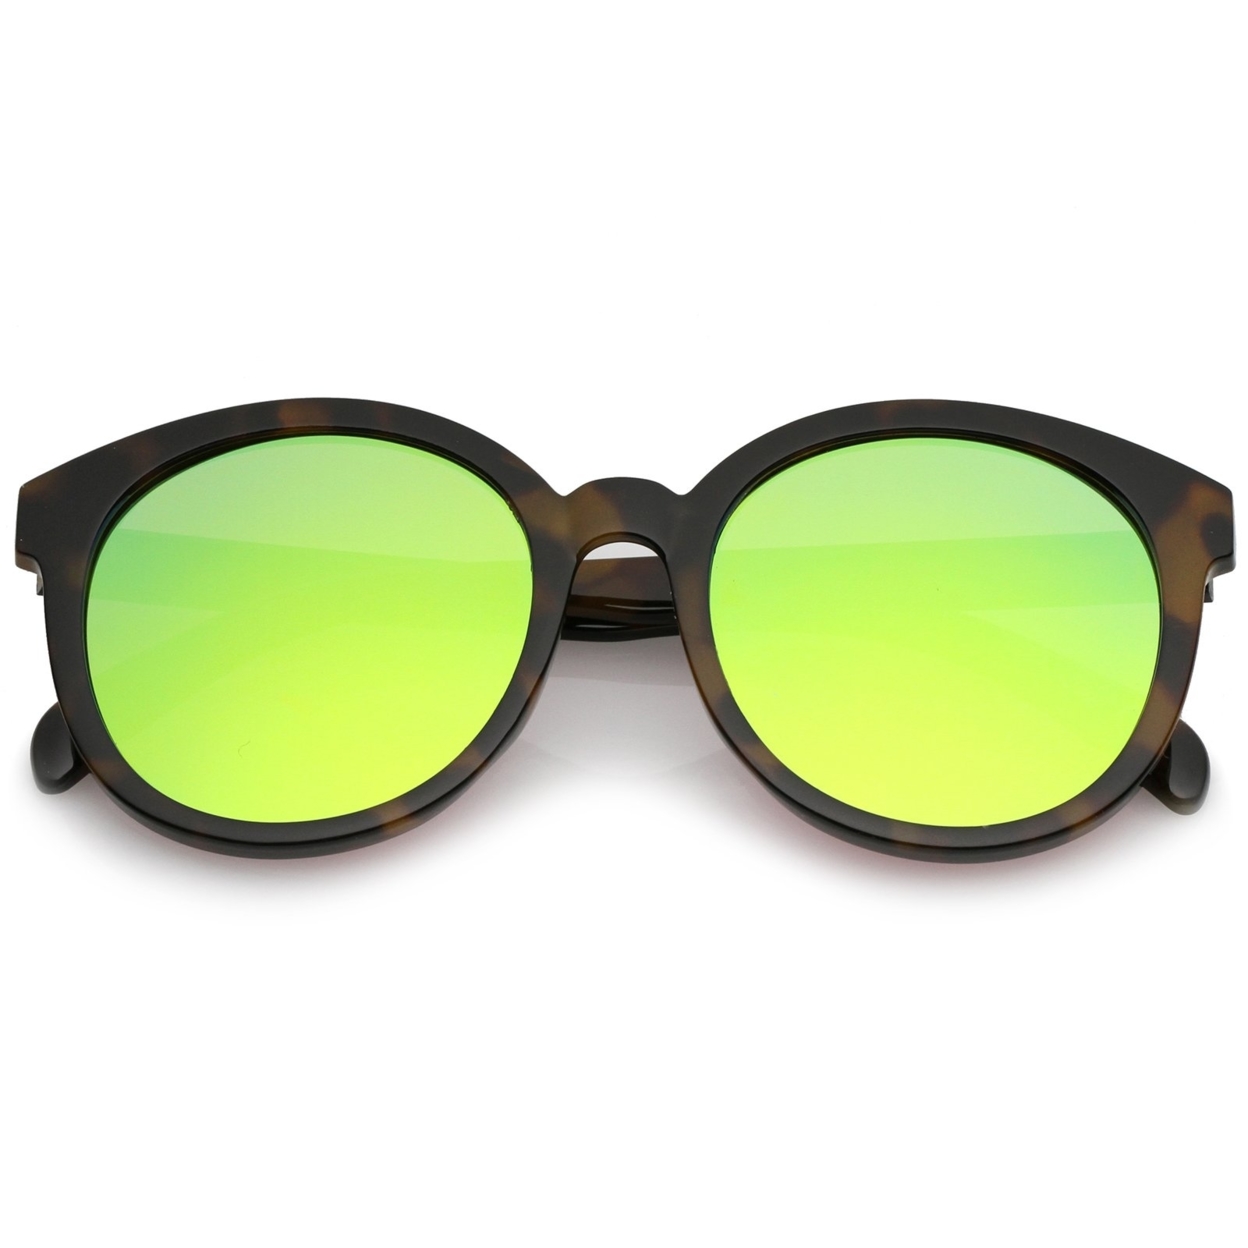 Oversize Super Flat Colored Mirror Lens Round Sunglasses 54mm - Creme / Blue